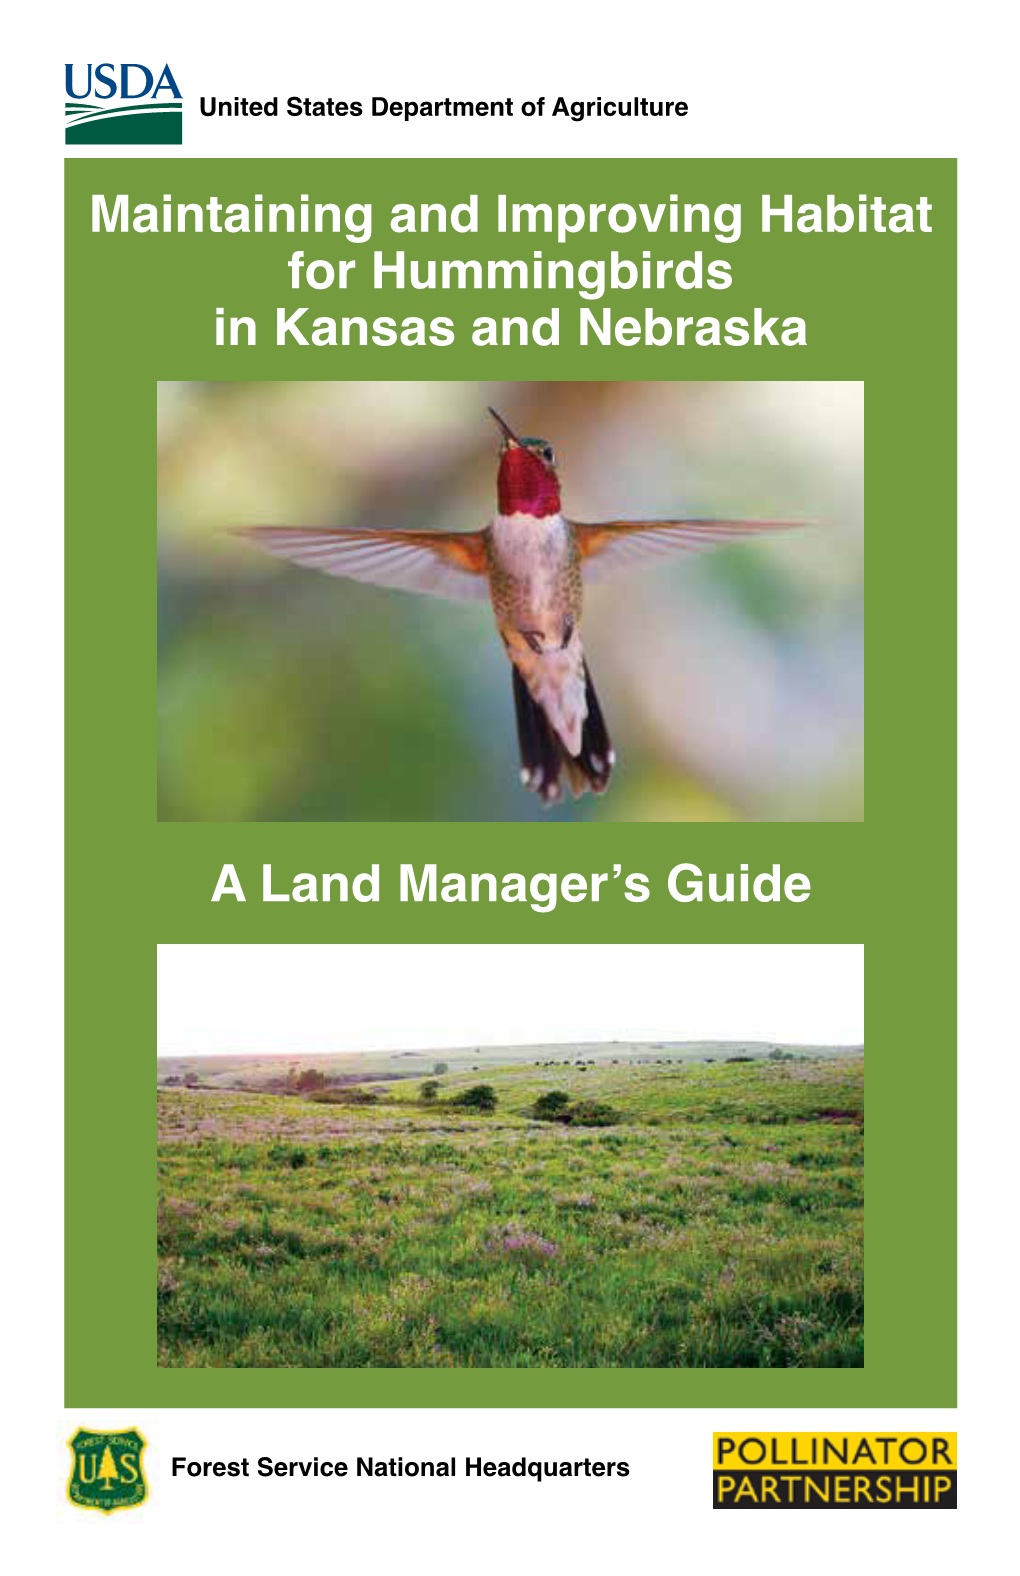 Maintaining and Improving Habitat for Hummingbirds in Kansas and Nebraska